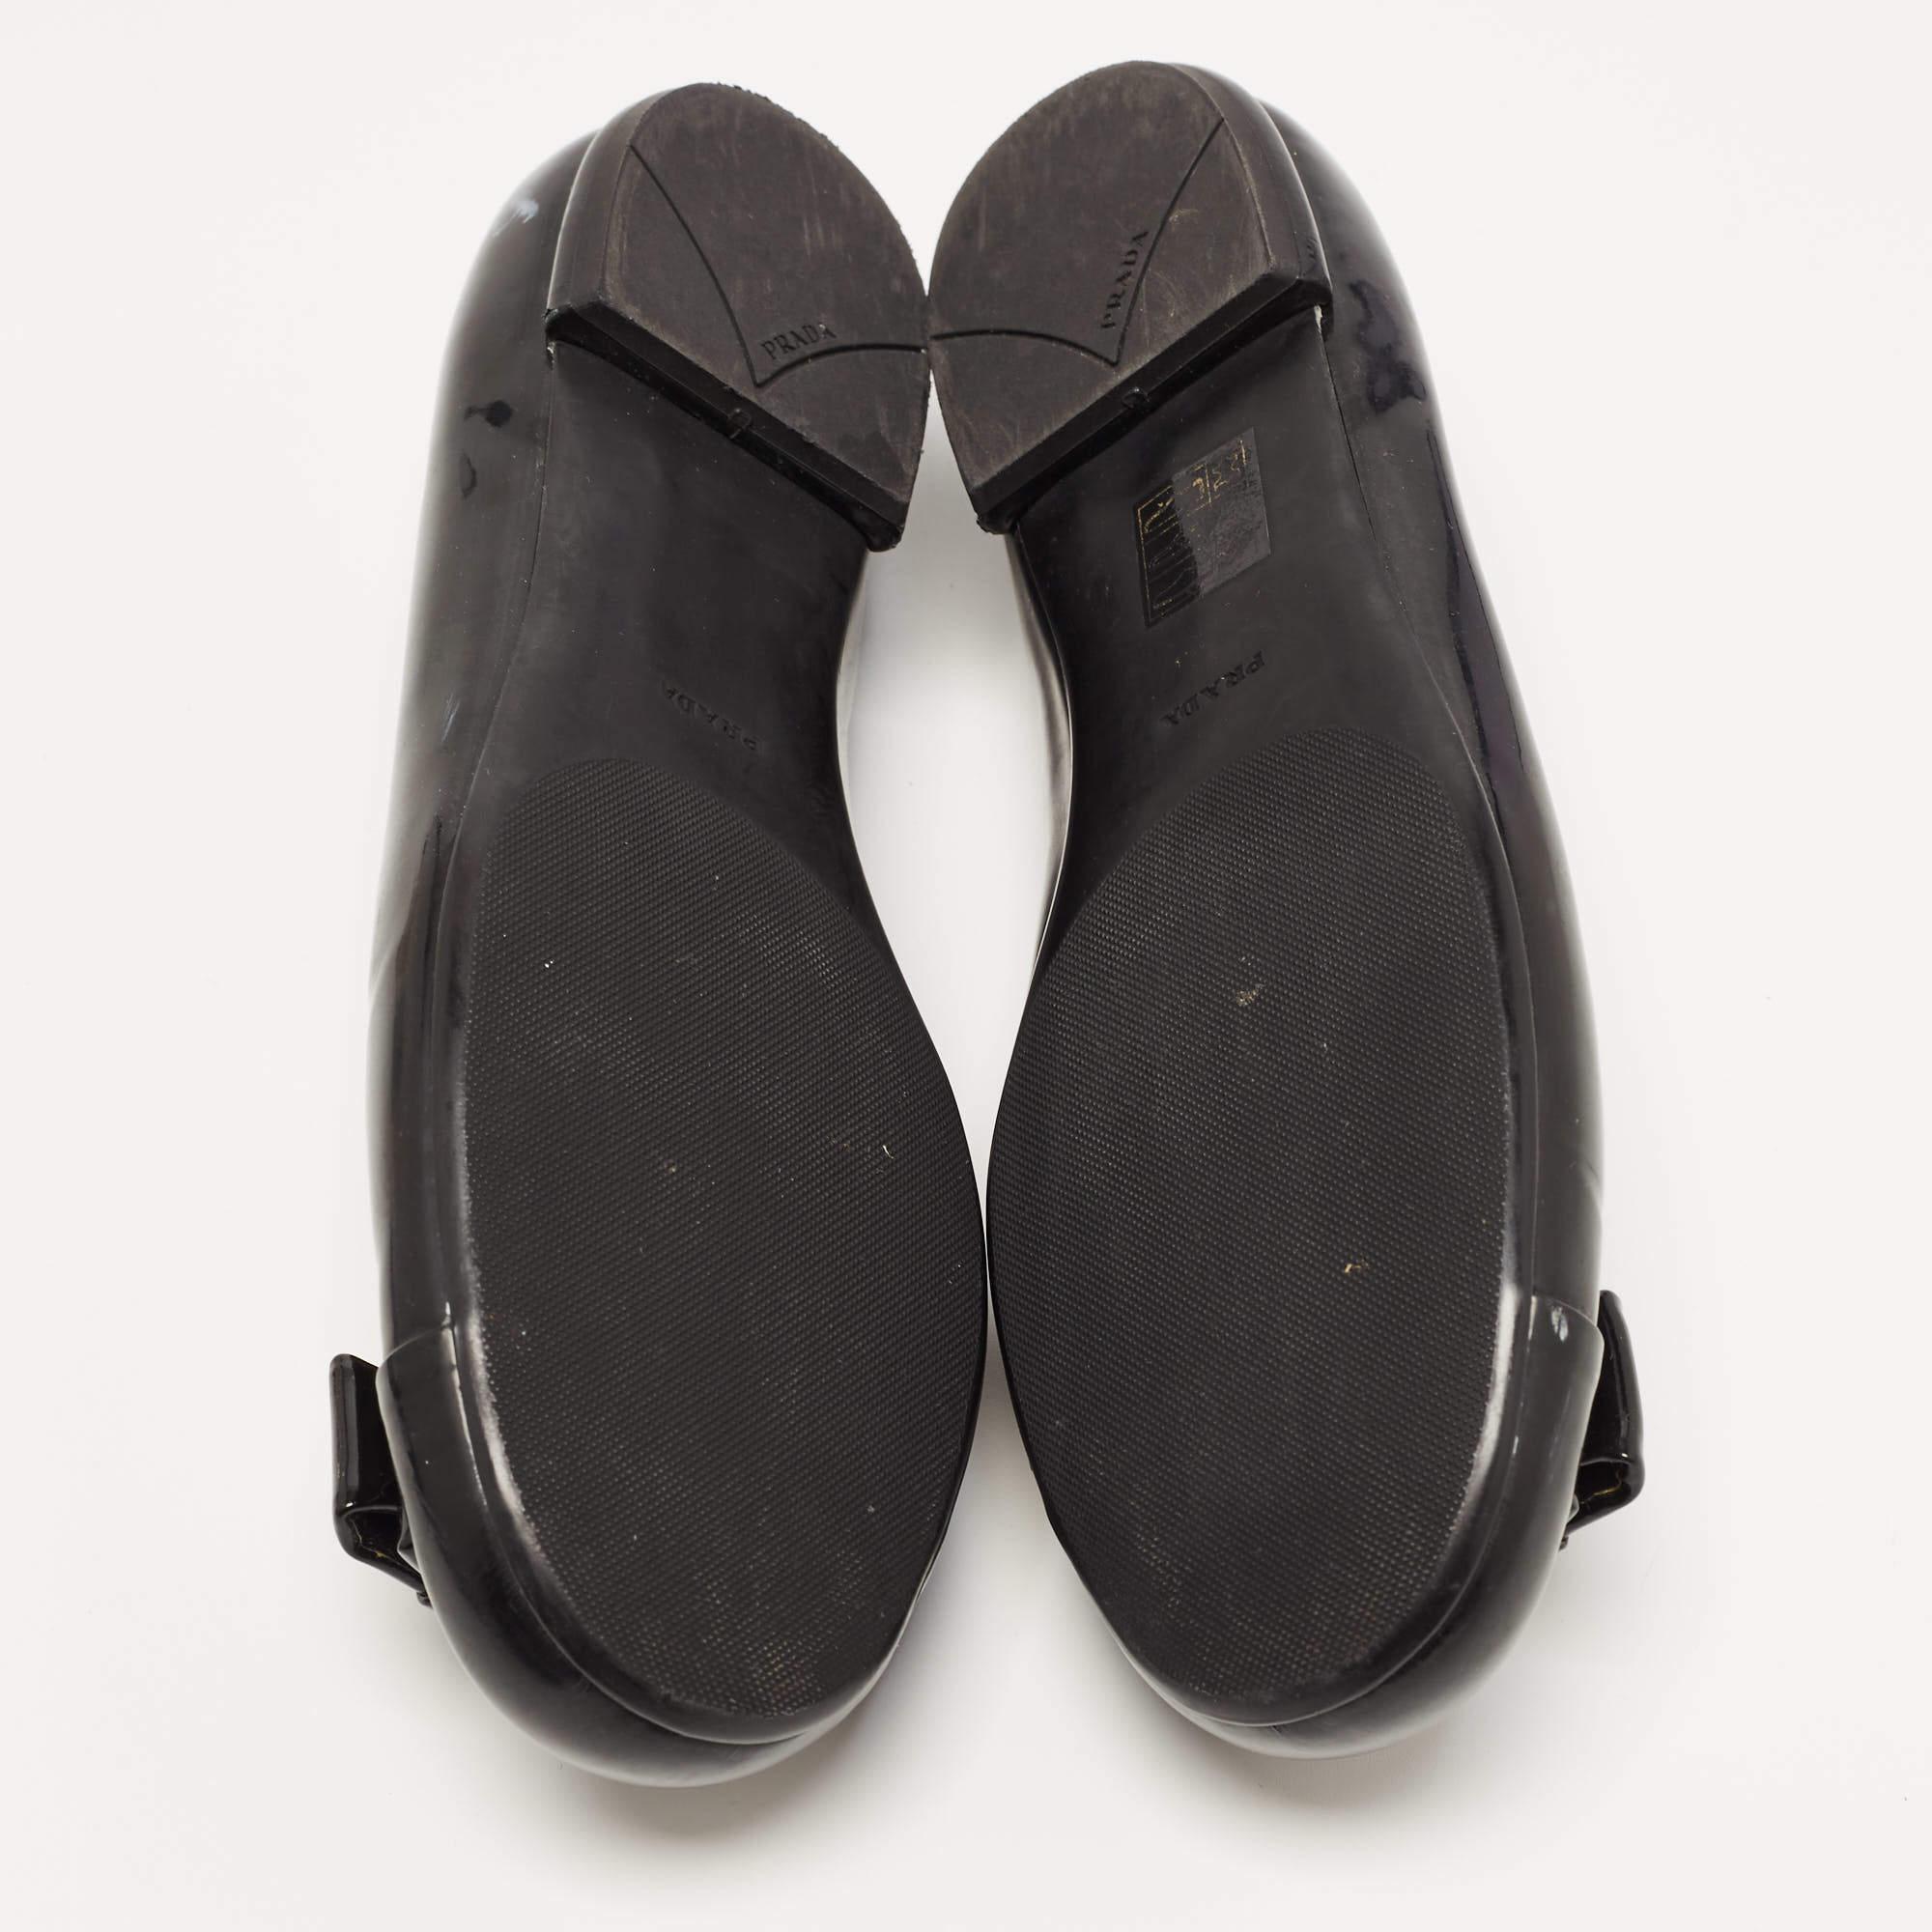 Prada Black Patent Leather Bow Ballet Flats Size 38 2